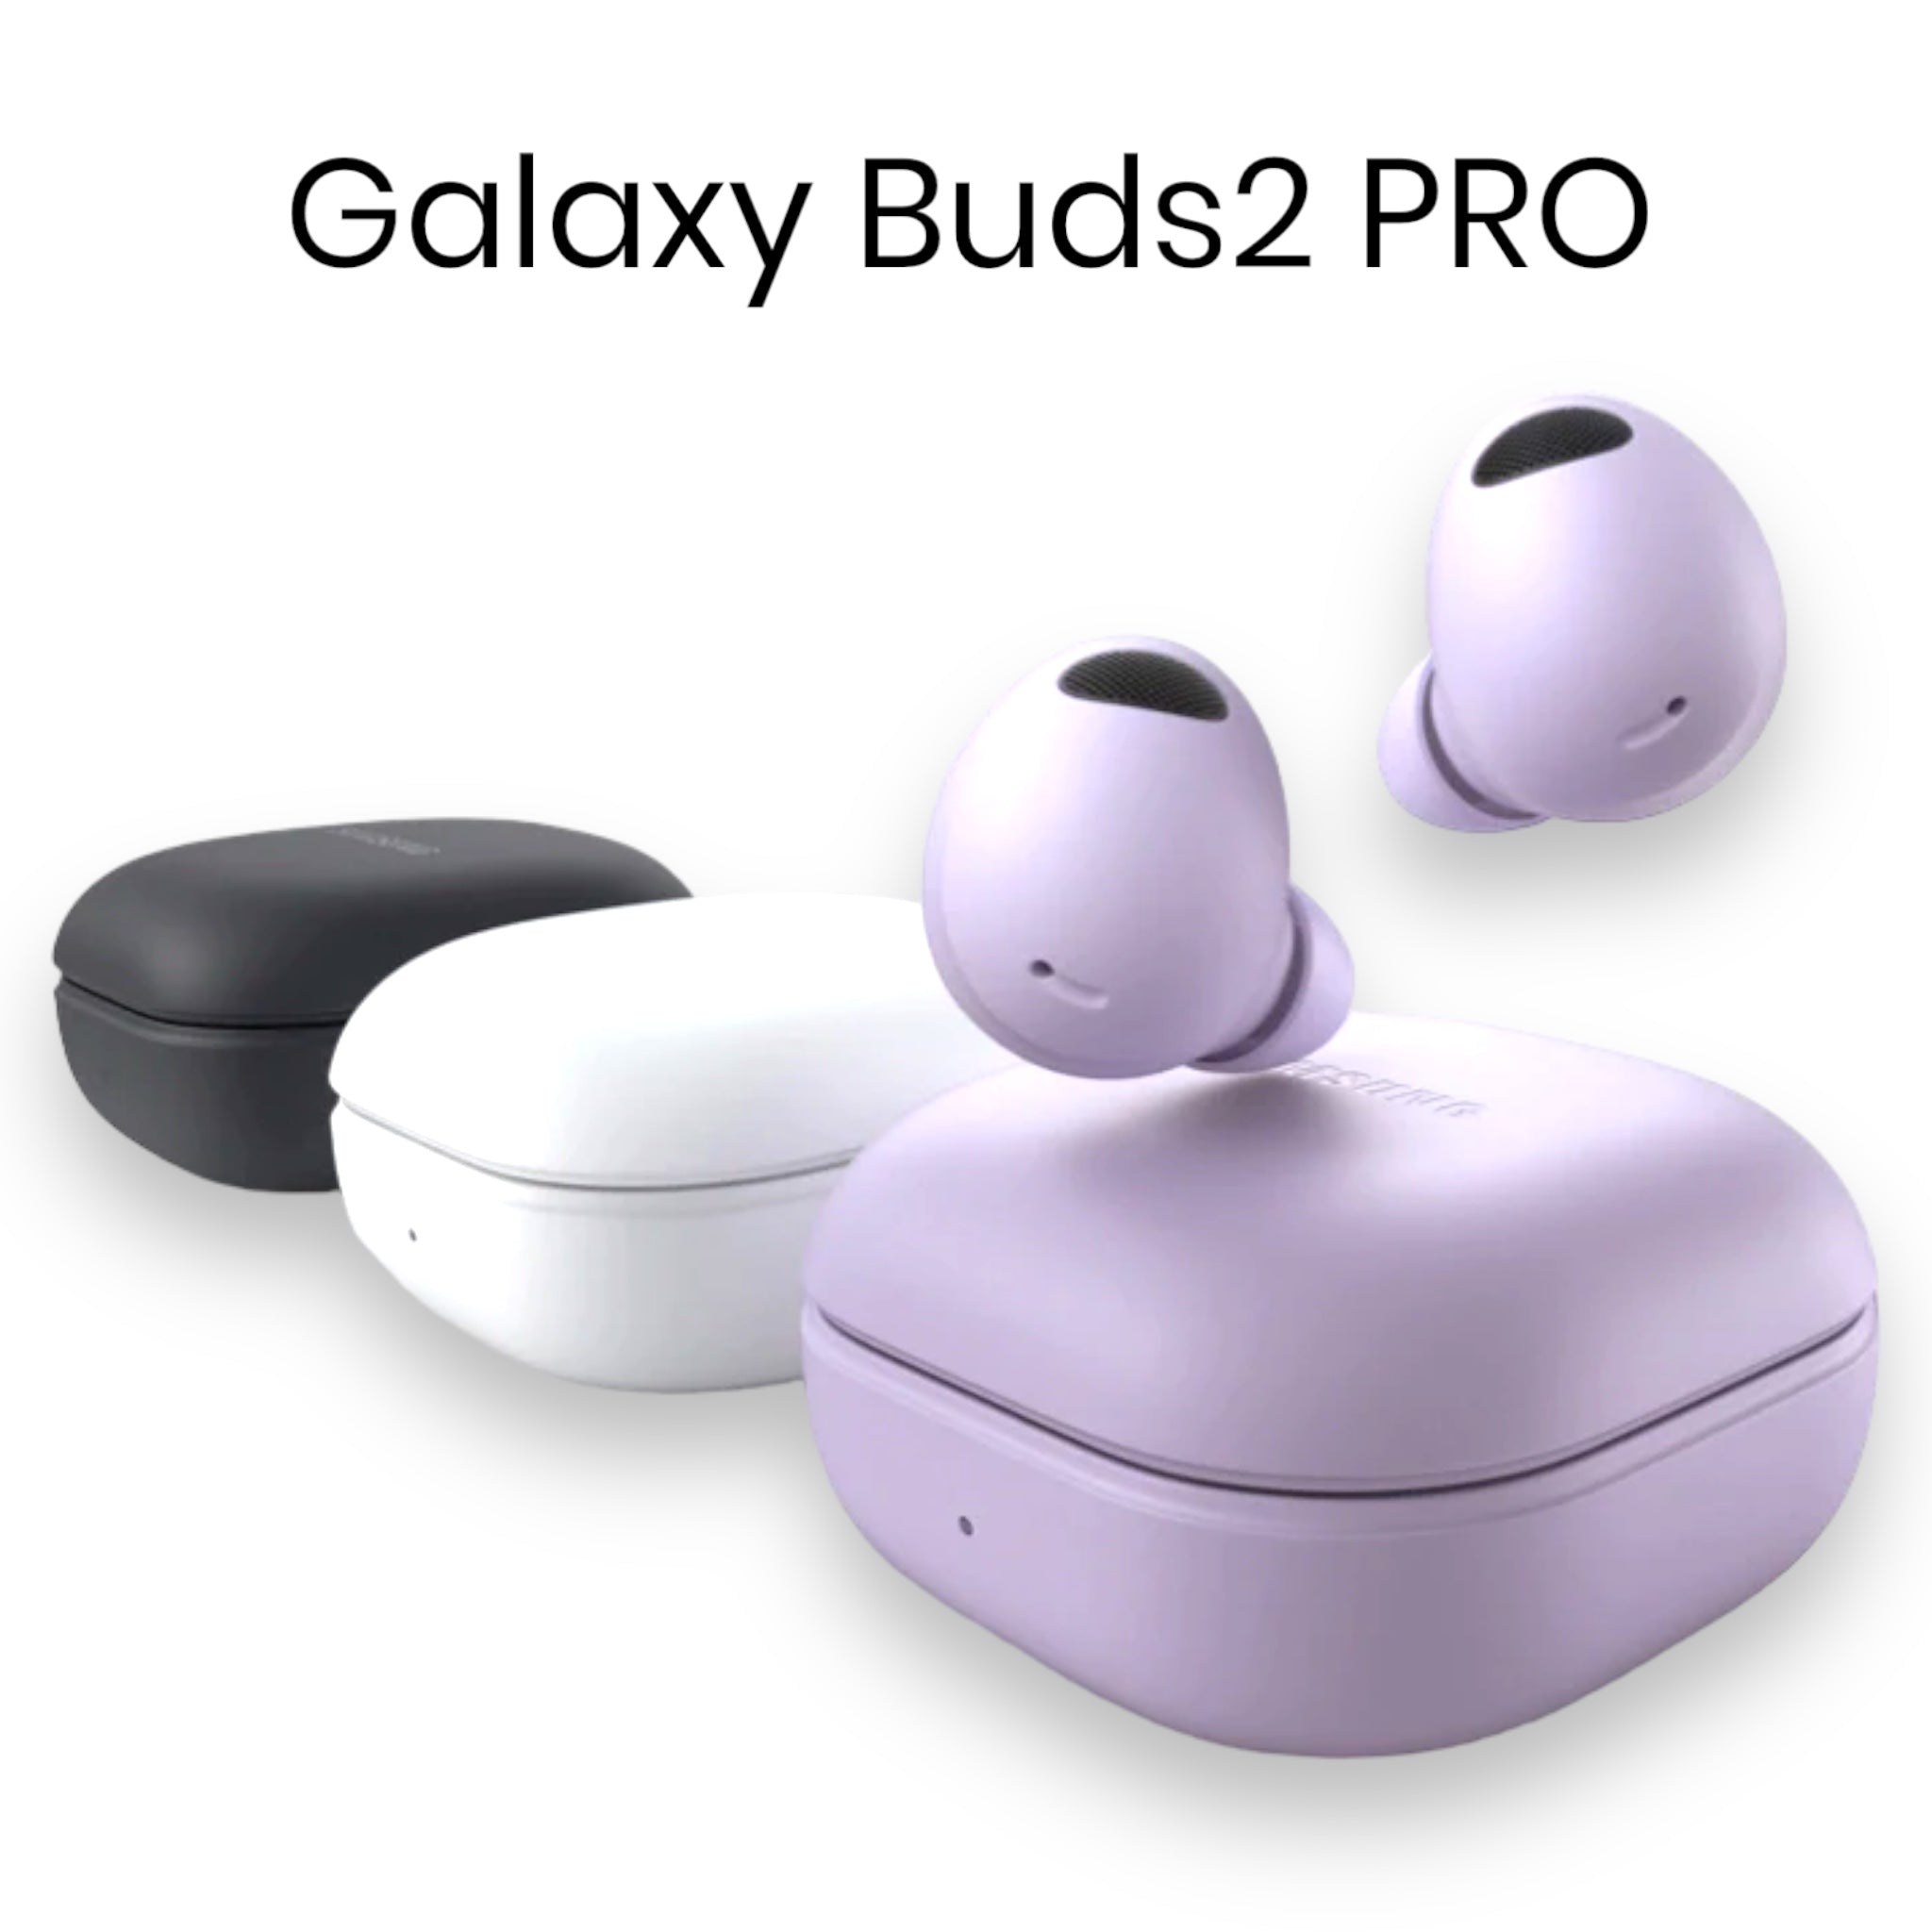 Galaxy Buds2 PRO